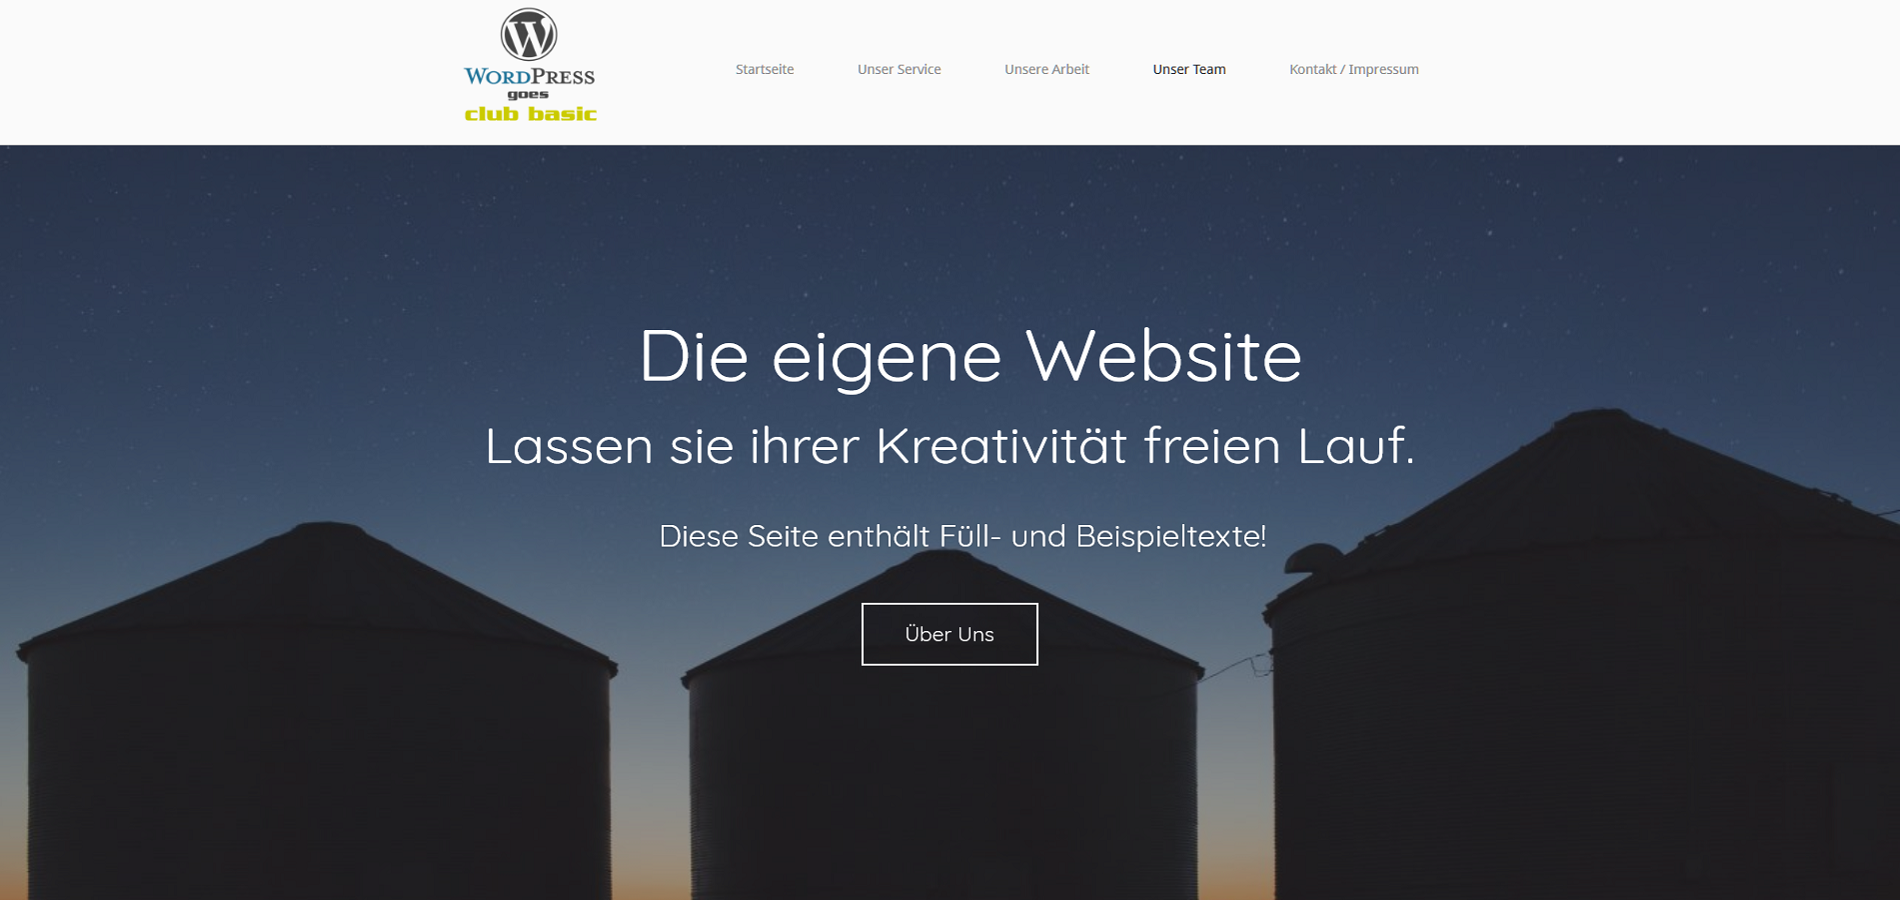 Wordpress Website Wordpress goes club basic